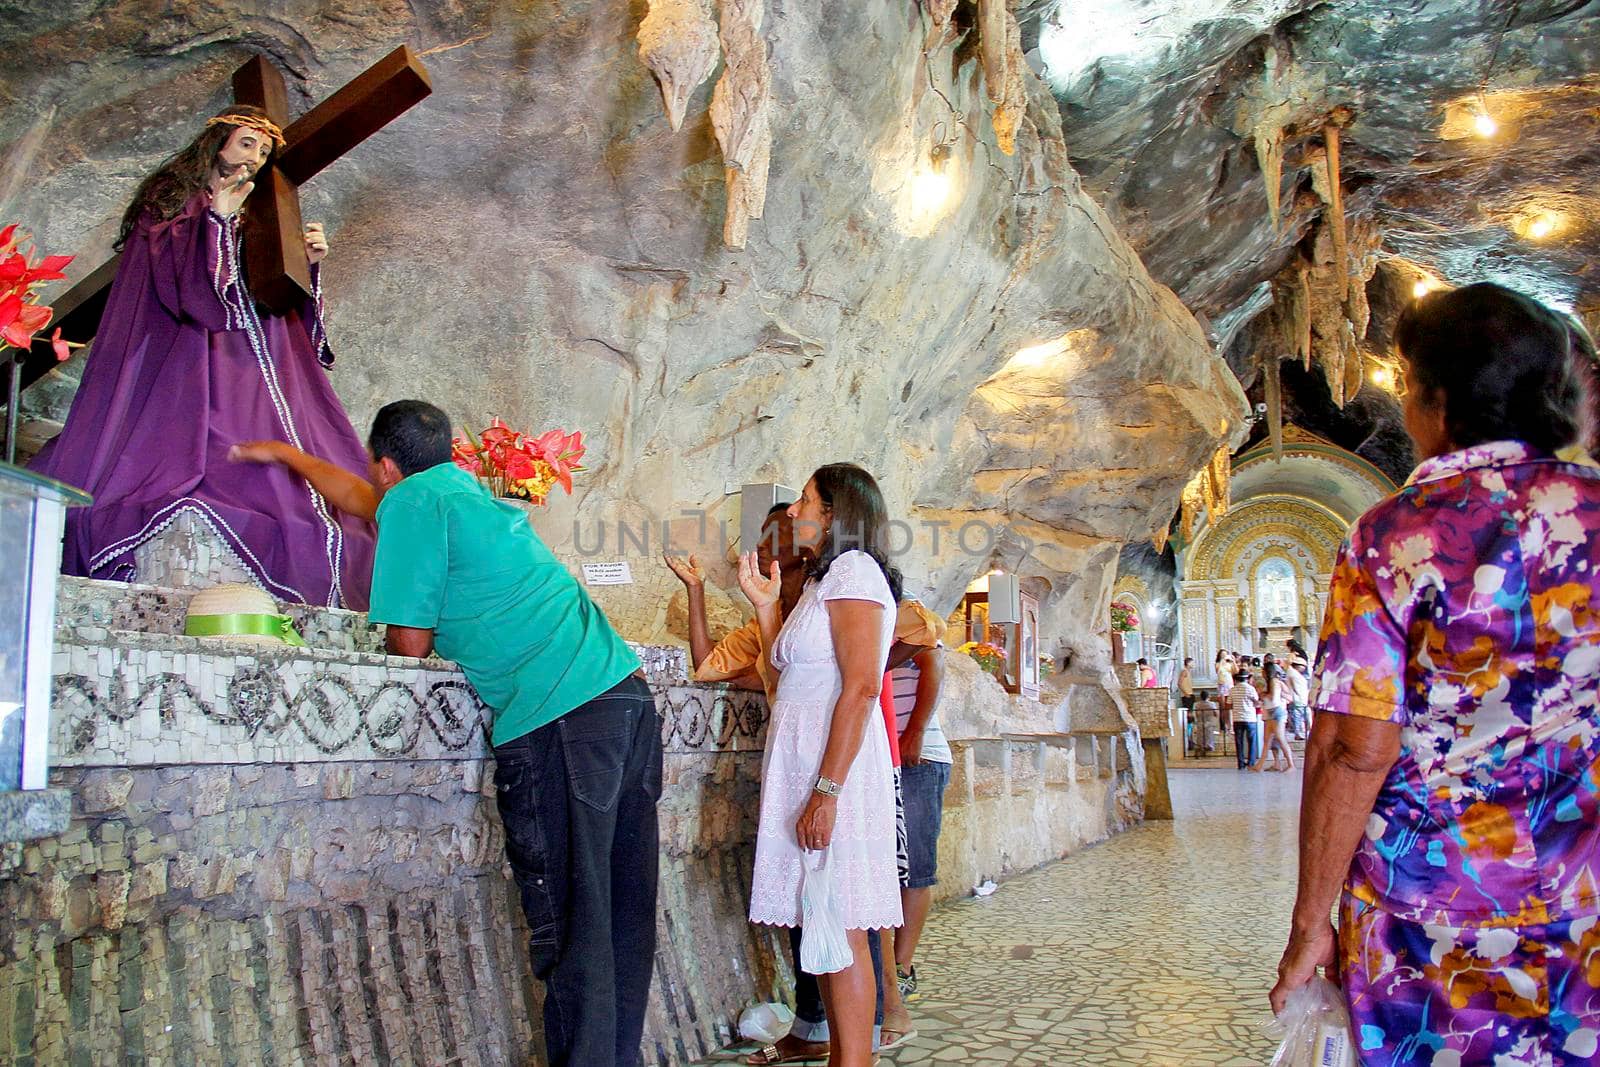 bom jesus da lapa, bahia, brazil - august 4, 2014: devotees participate in religious pilgrimage in the city of Bom Jesus da Lapa
